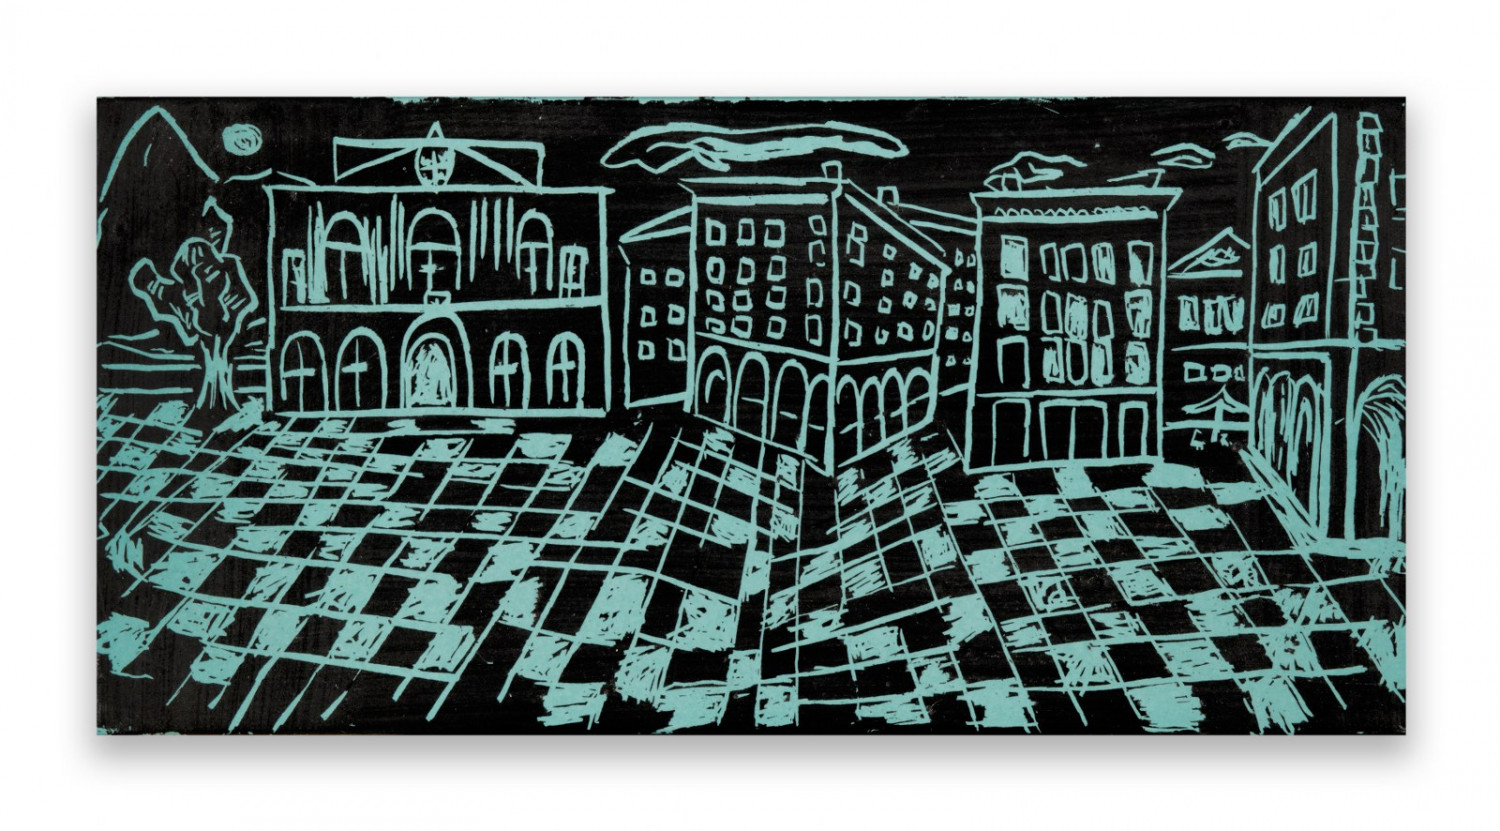 Alex Dorici, ‘Desert City’, 2012, grattage on painted ceramic tile 